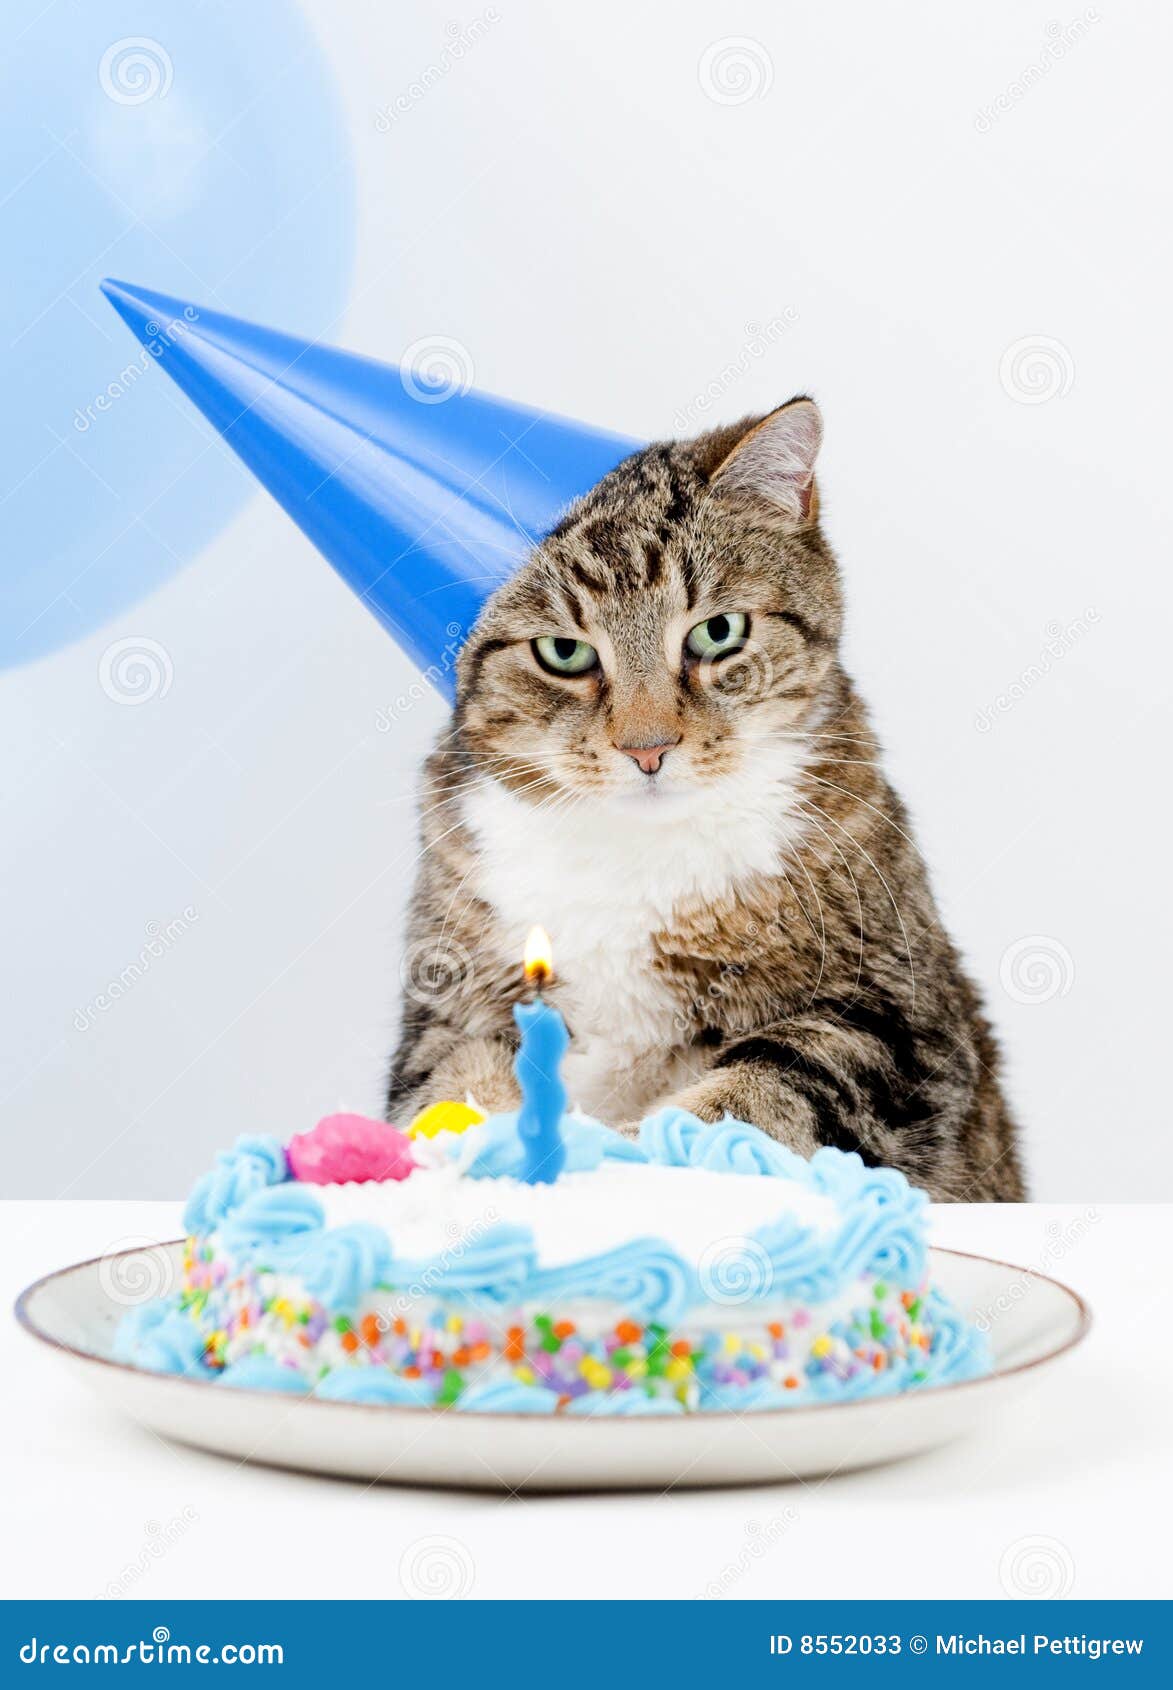 clip art birthday cat - photo #36